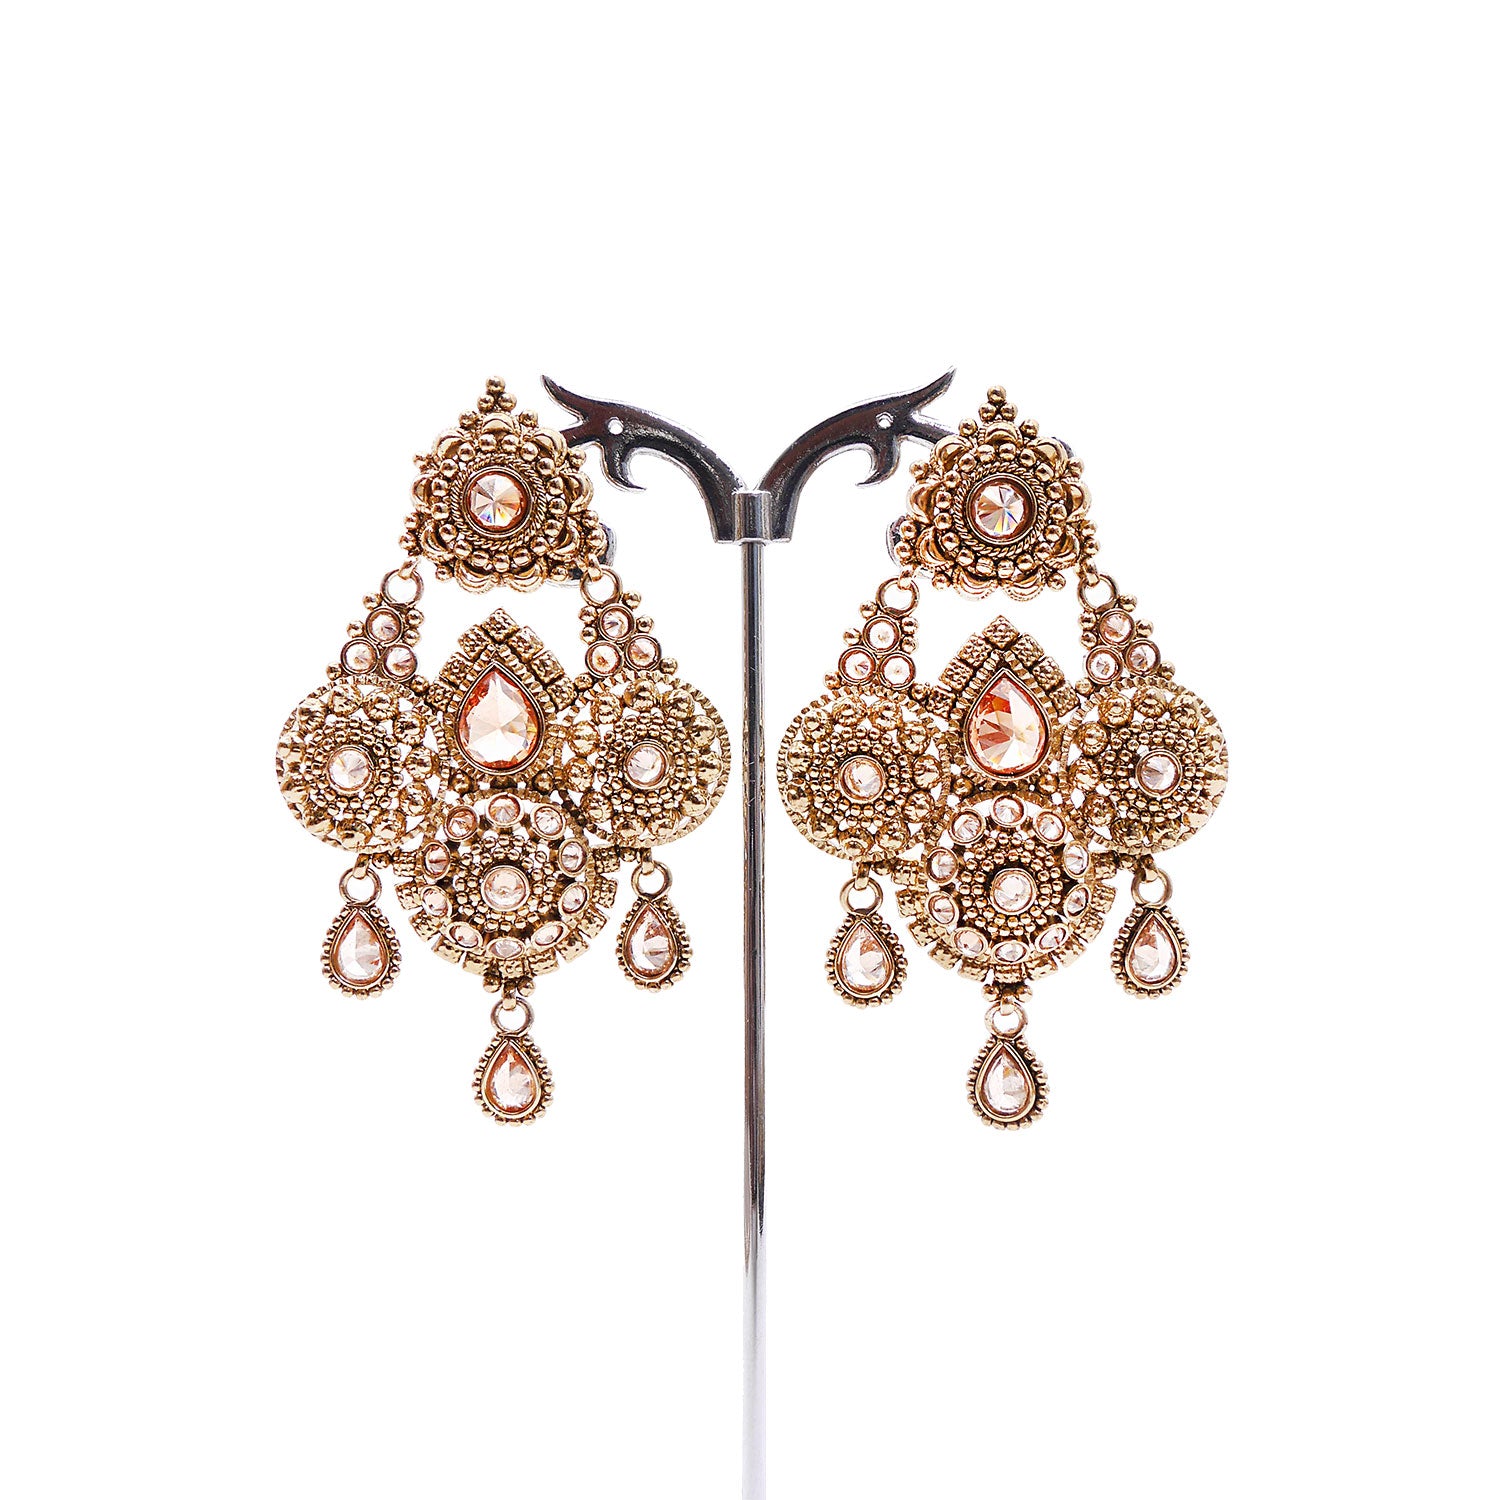 Circular Chandbali Earrings in Antique Gold